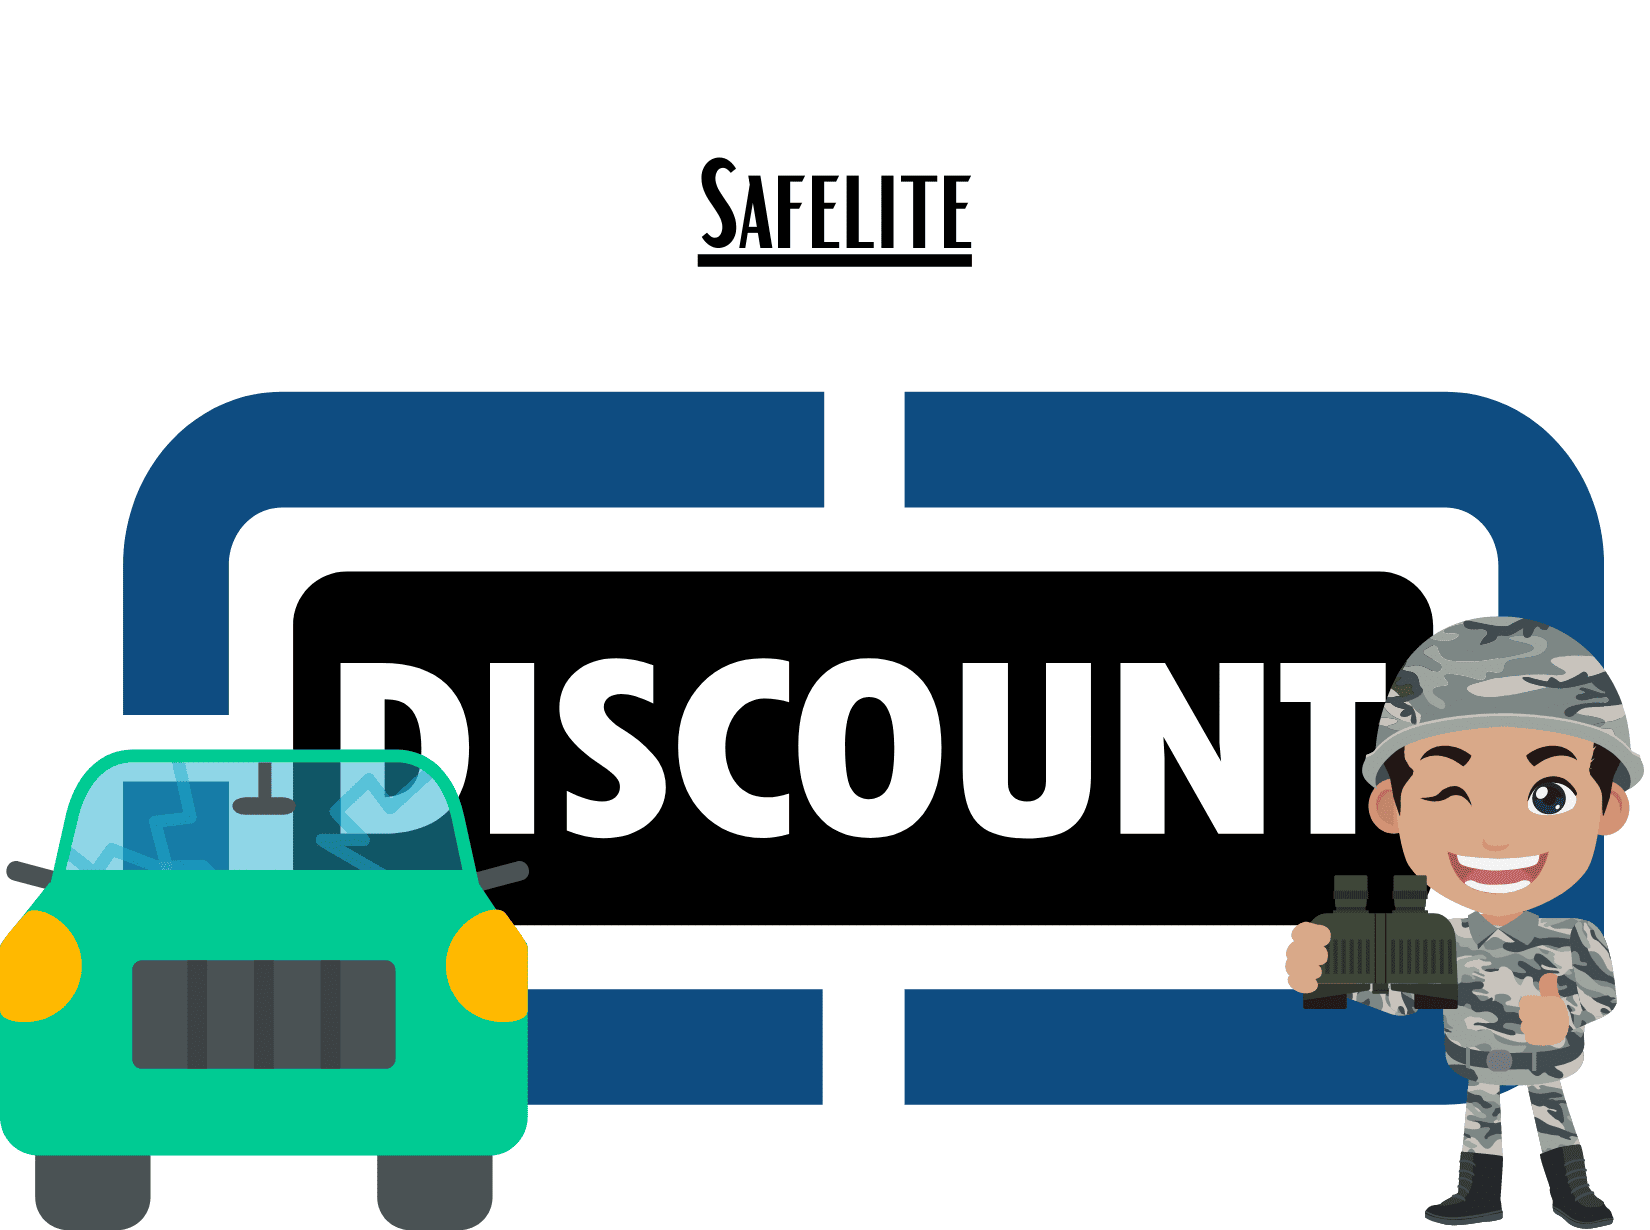 Safelite Military Discount (Great Savings Tips Too!) Wildchildretire